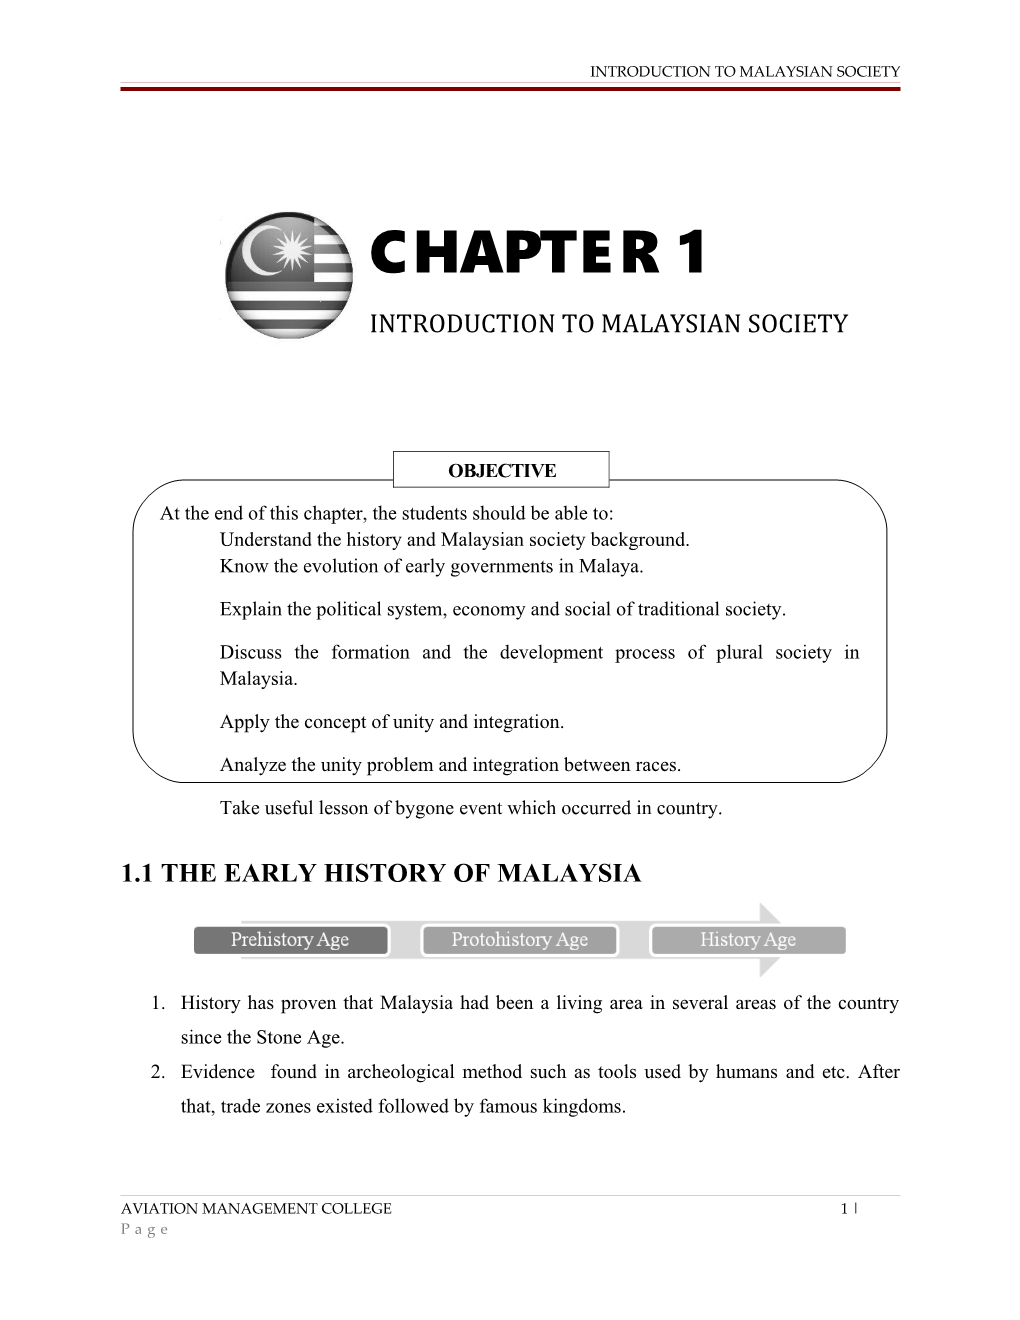 Introduction to Malaysian Society